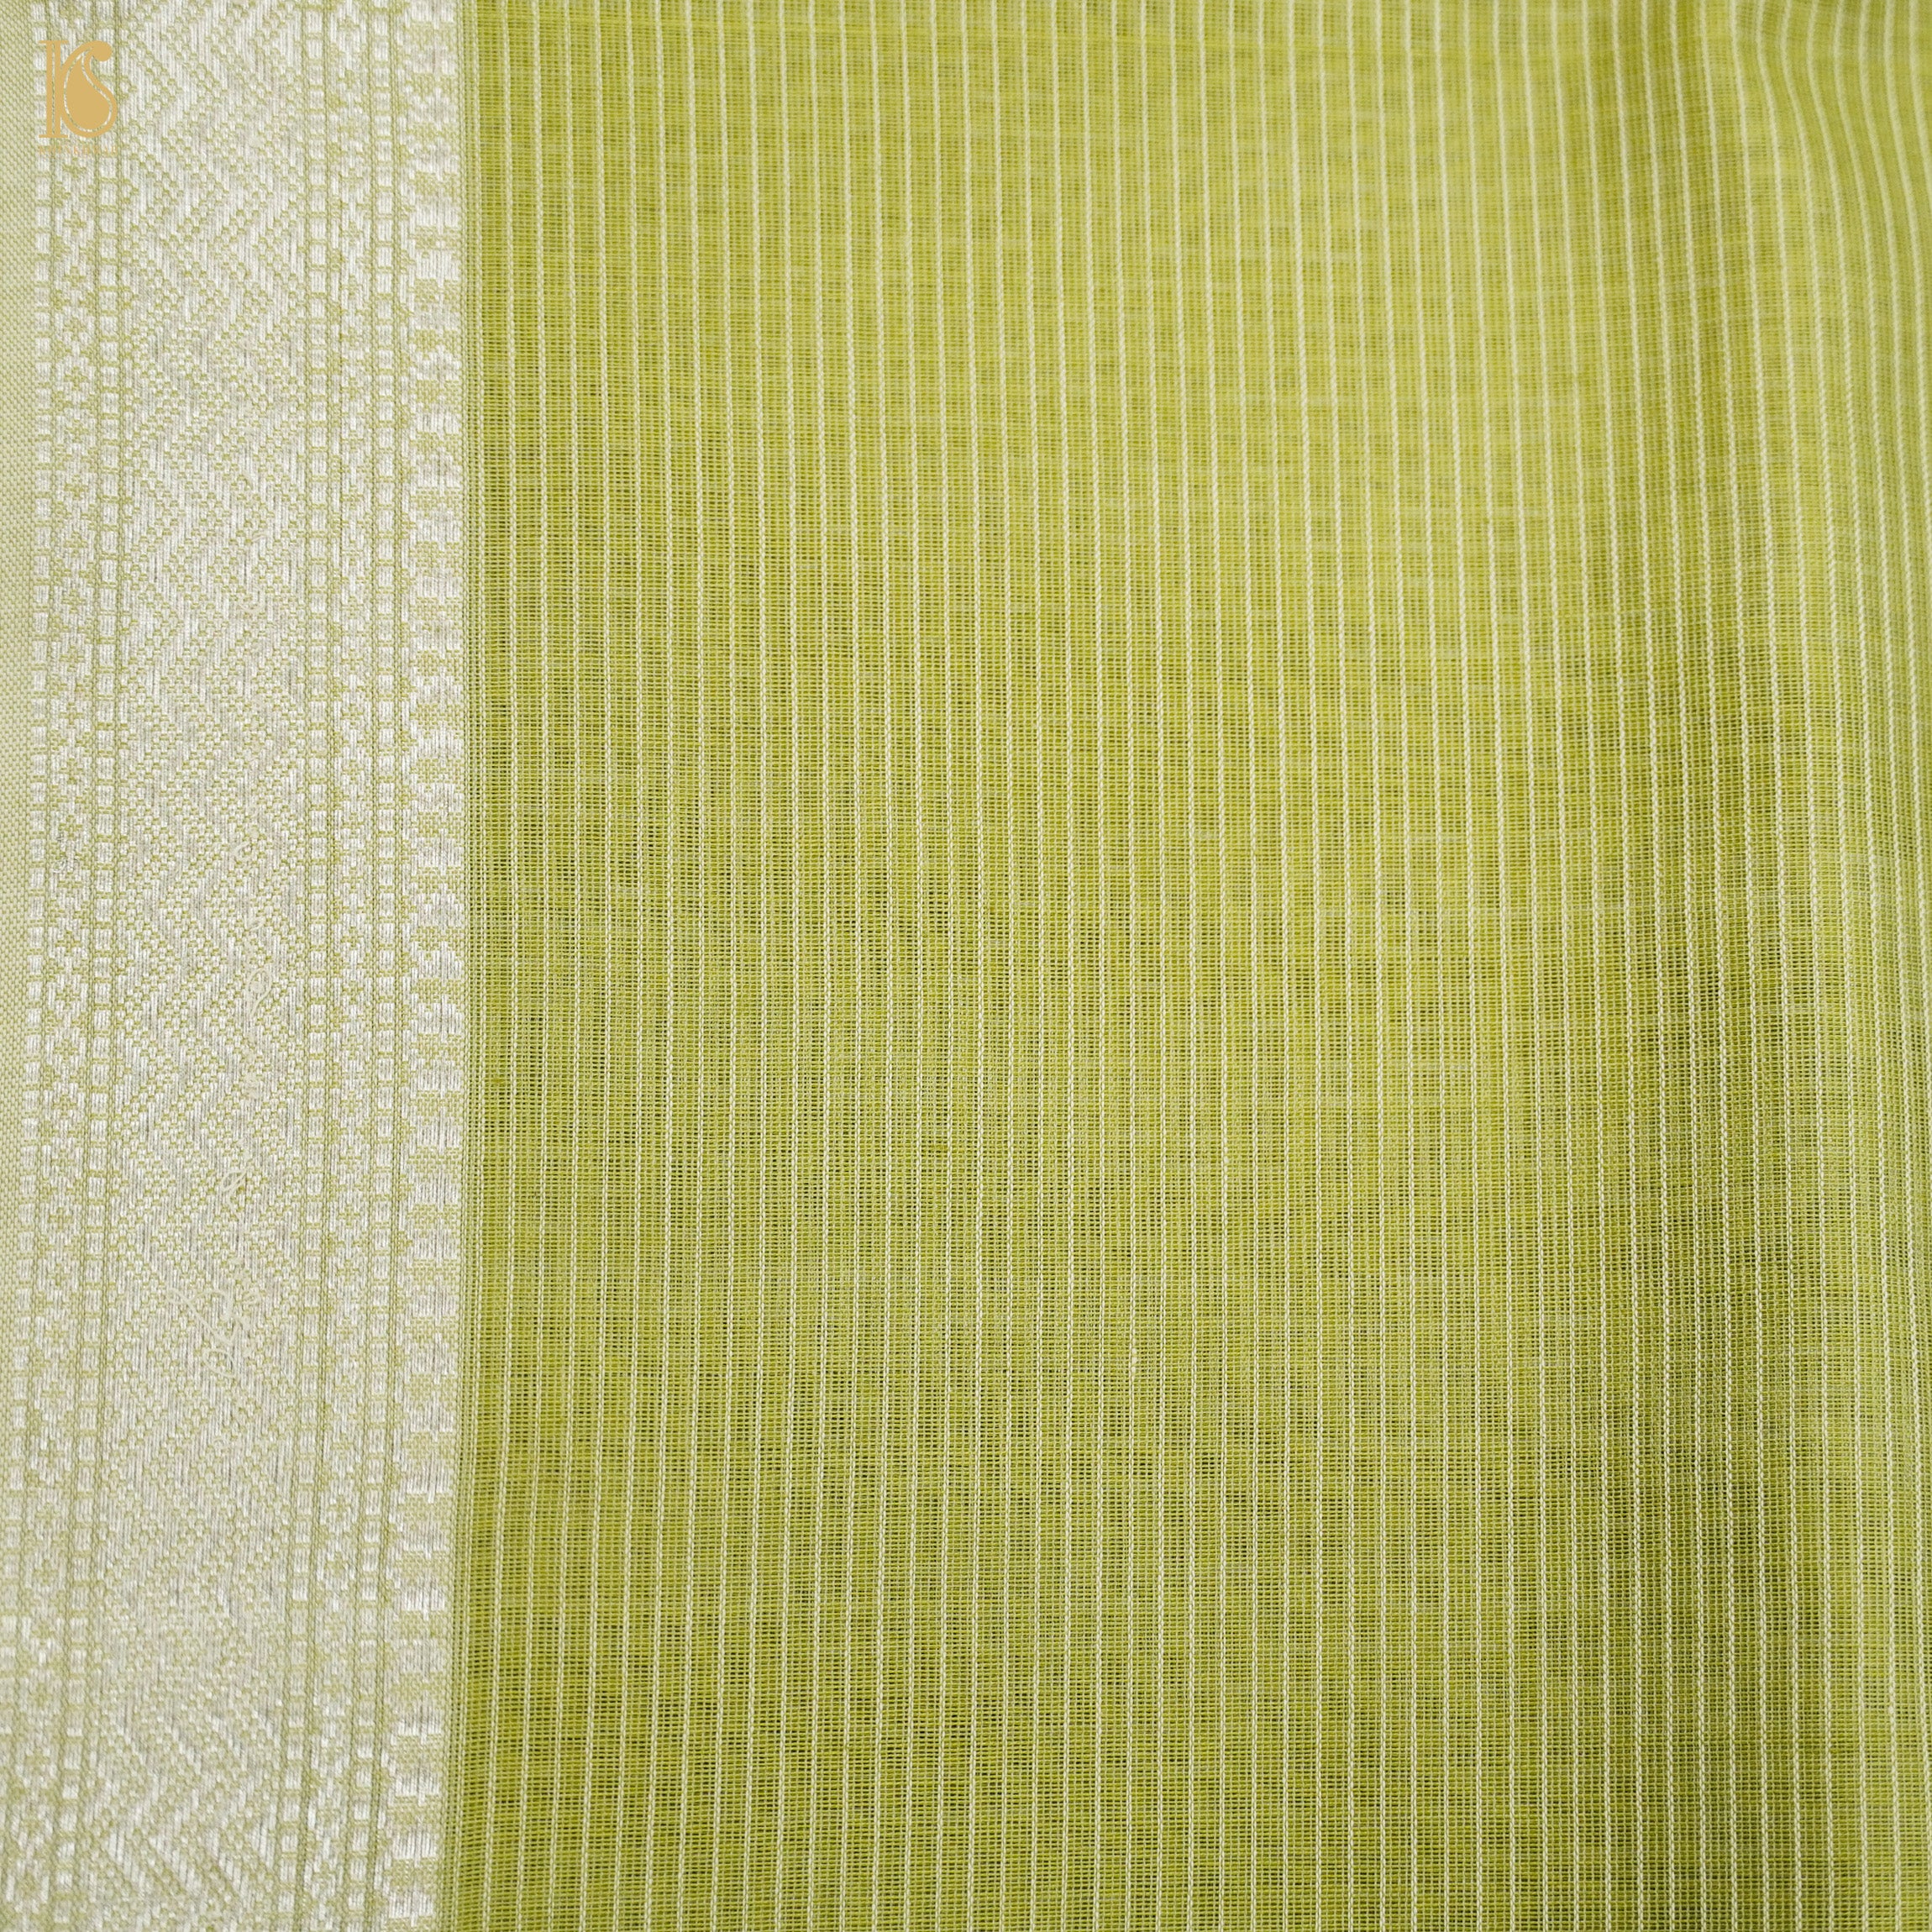 Gimblet Green Handwoven Pure Cotton Silk Maheshwari Saree - Khinkhwab